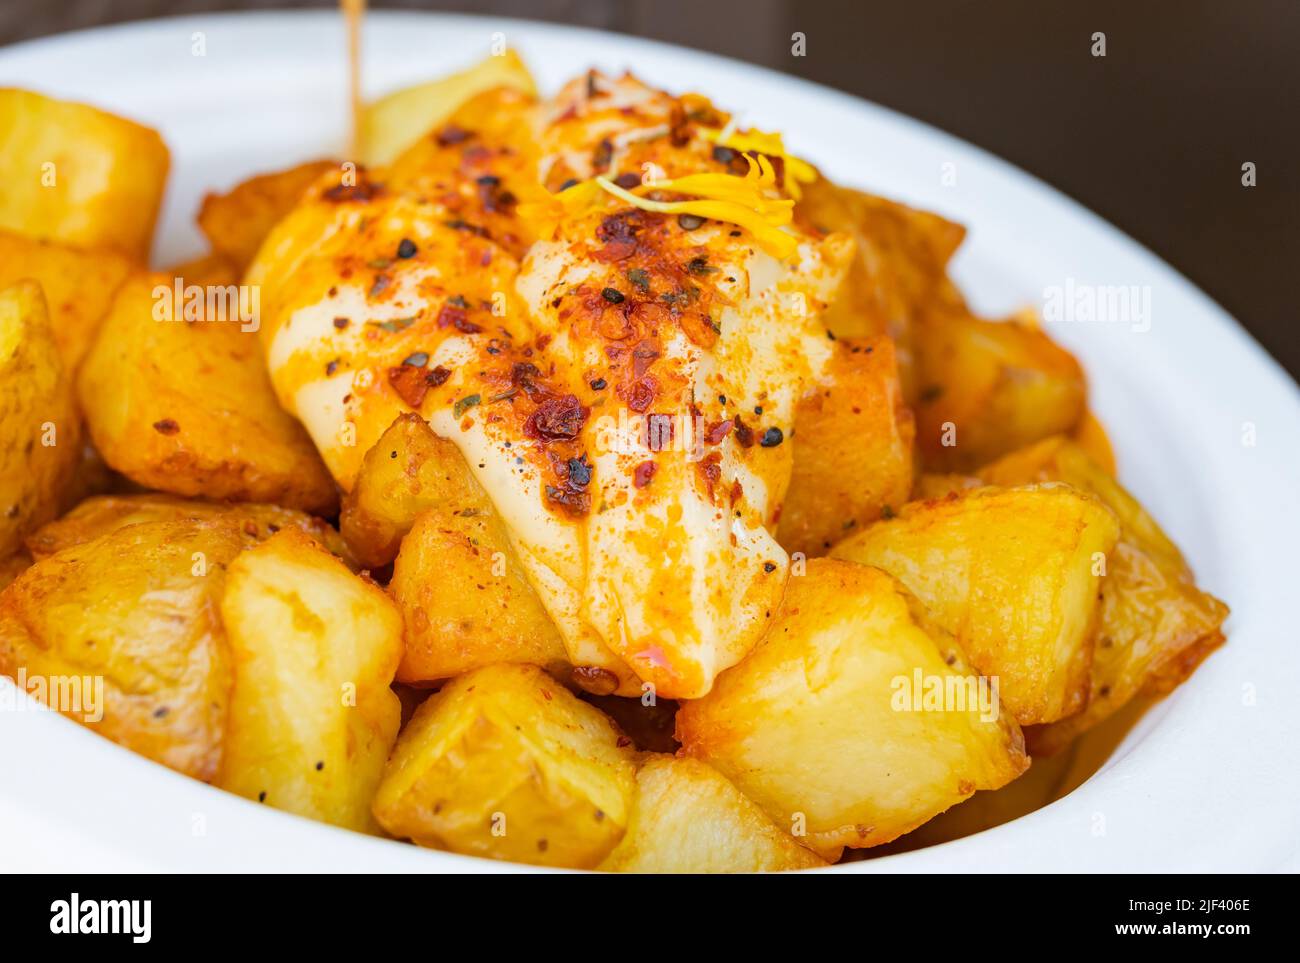 Patatas bravas traditionnel avec sauce aïoli, nourriture espagnole,  approche sélective de la sauce Photo Stock - Alamy